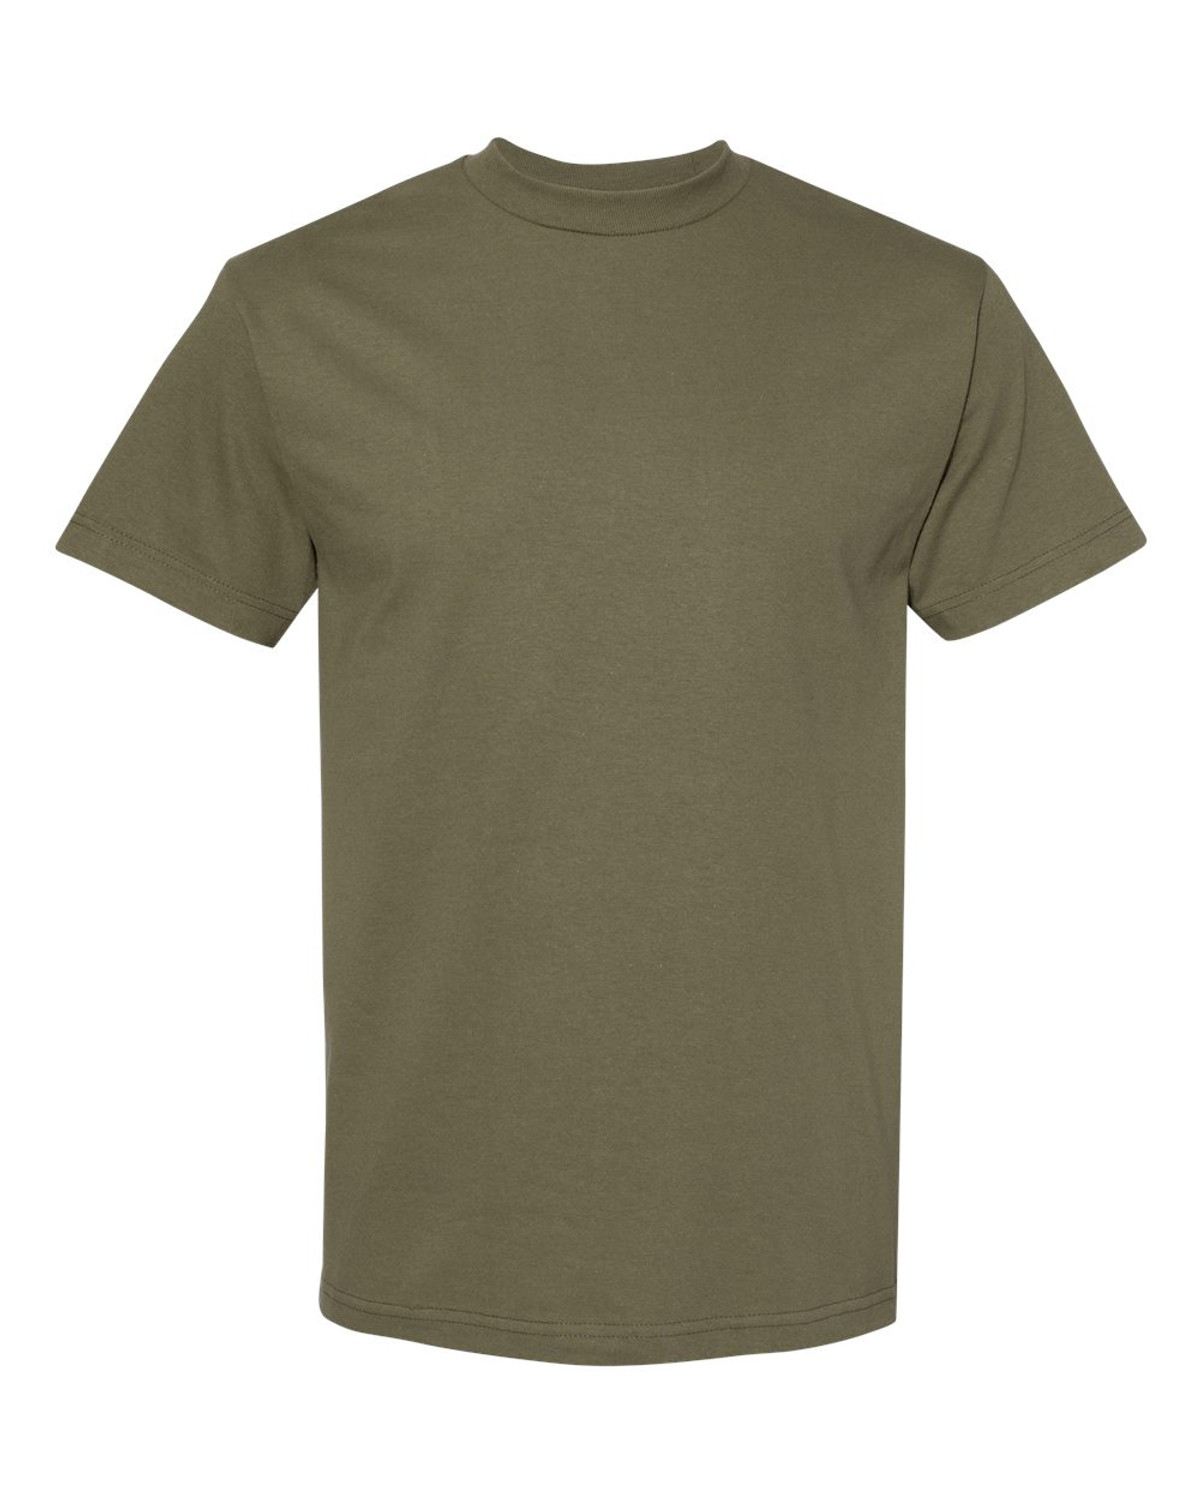 American Apparel 2007 Long Sleeve Shirt Size Chart, Unisex Long